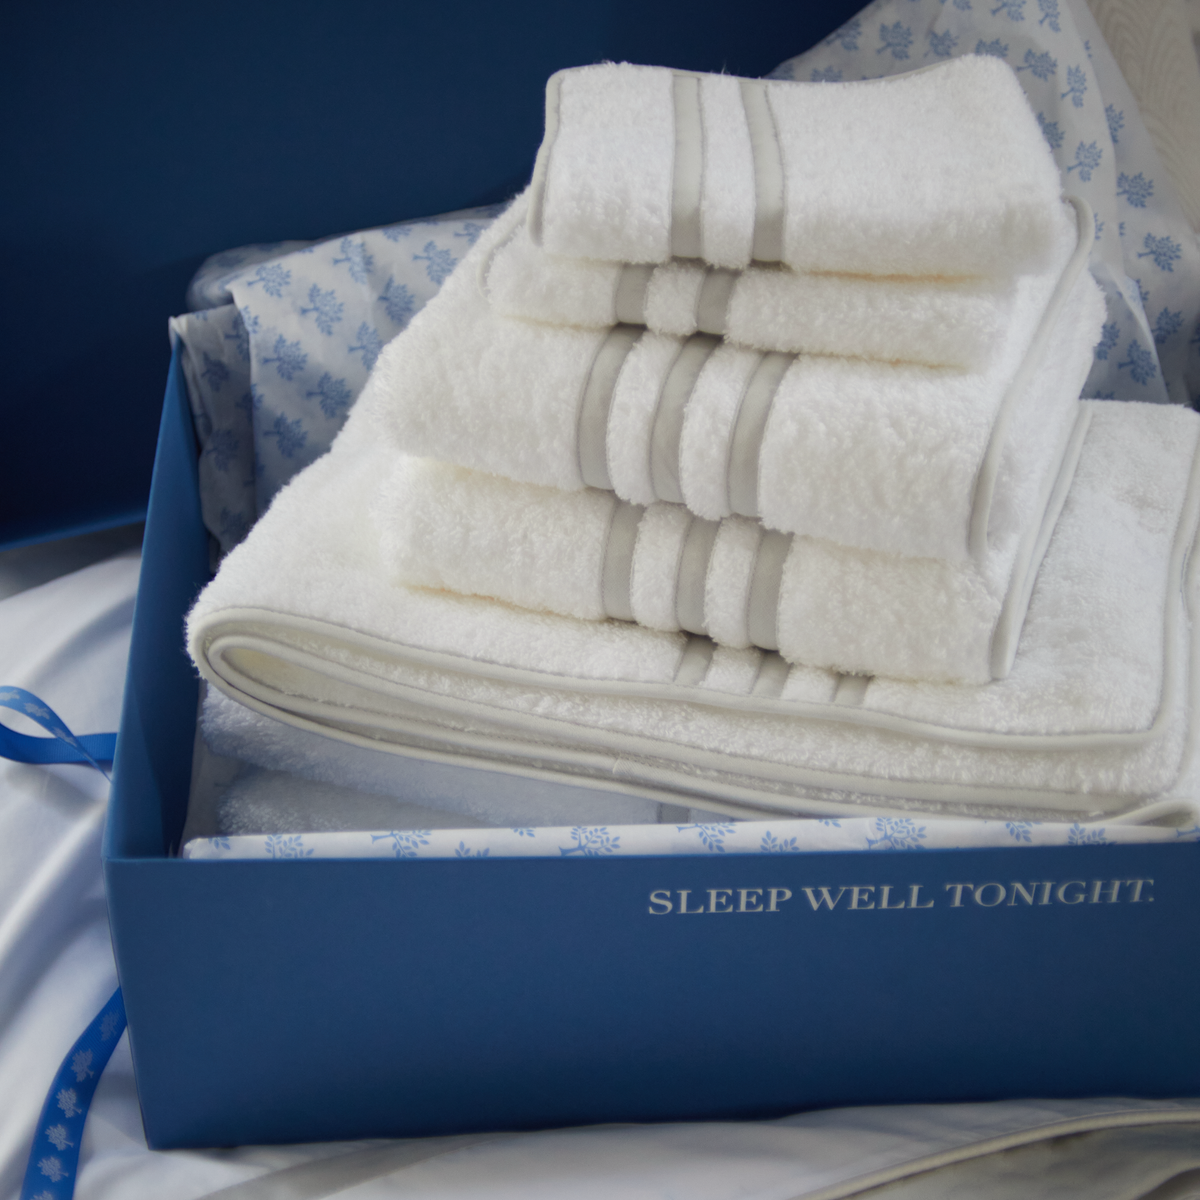 Matouk Newport Bath Towels in Gift Box